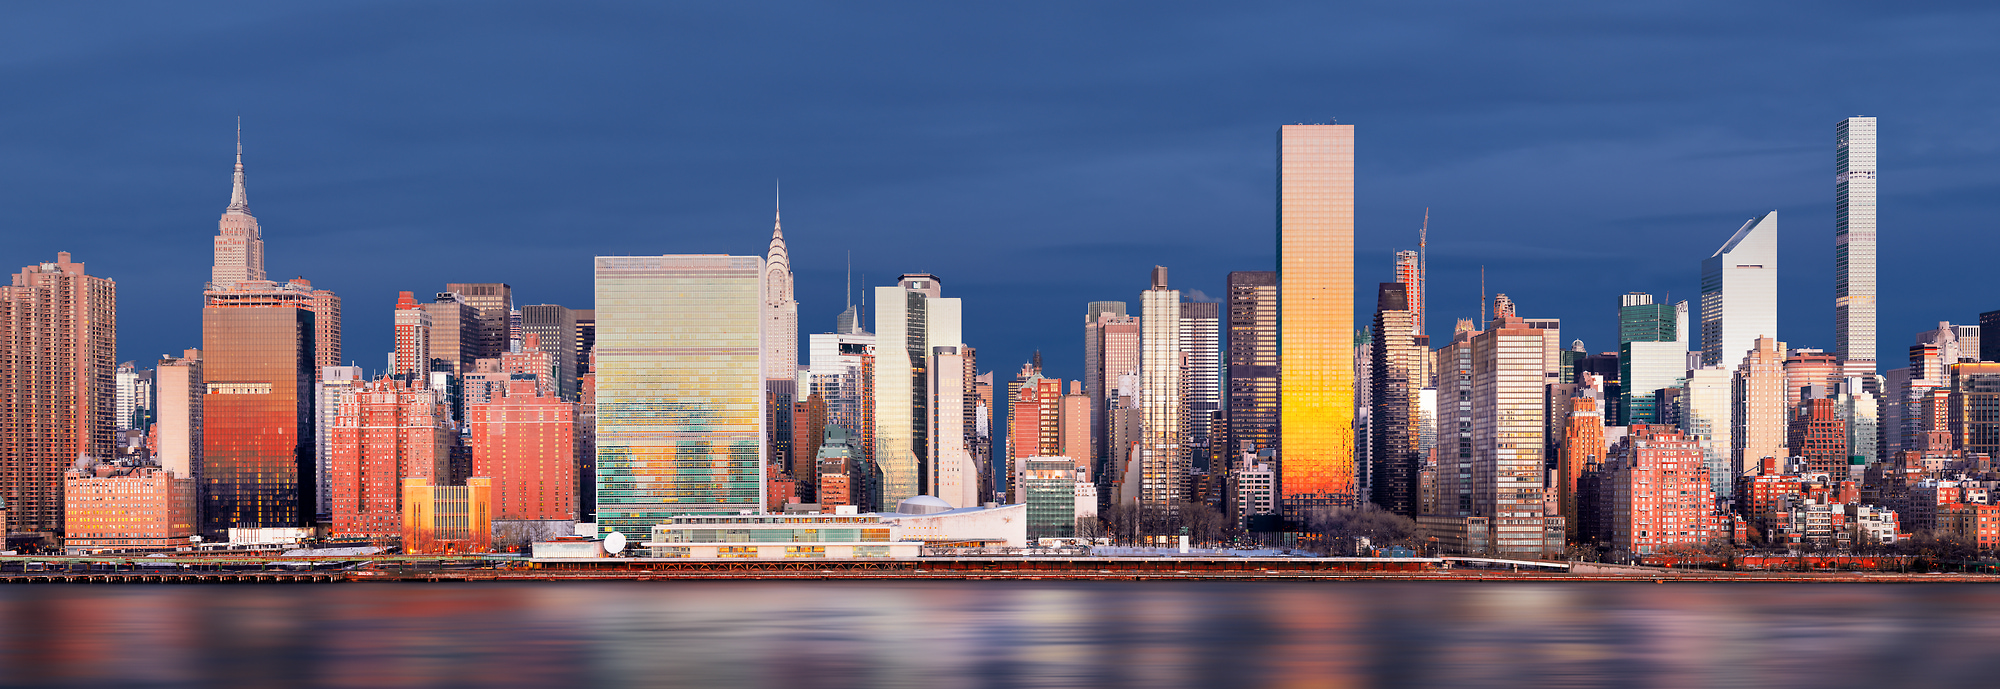 High Resolution New York City Skyline Photo - VAST